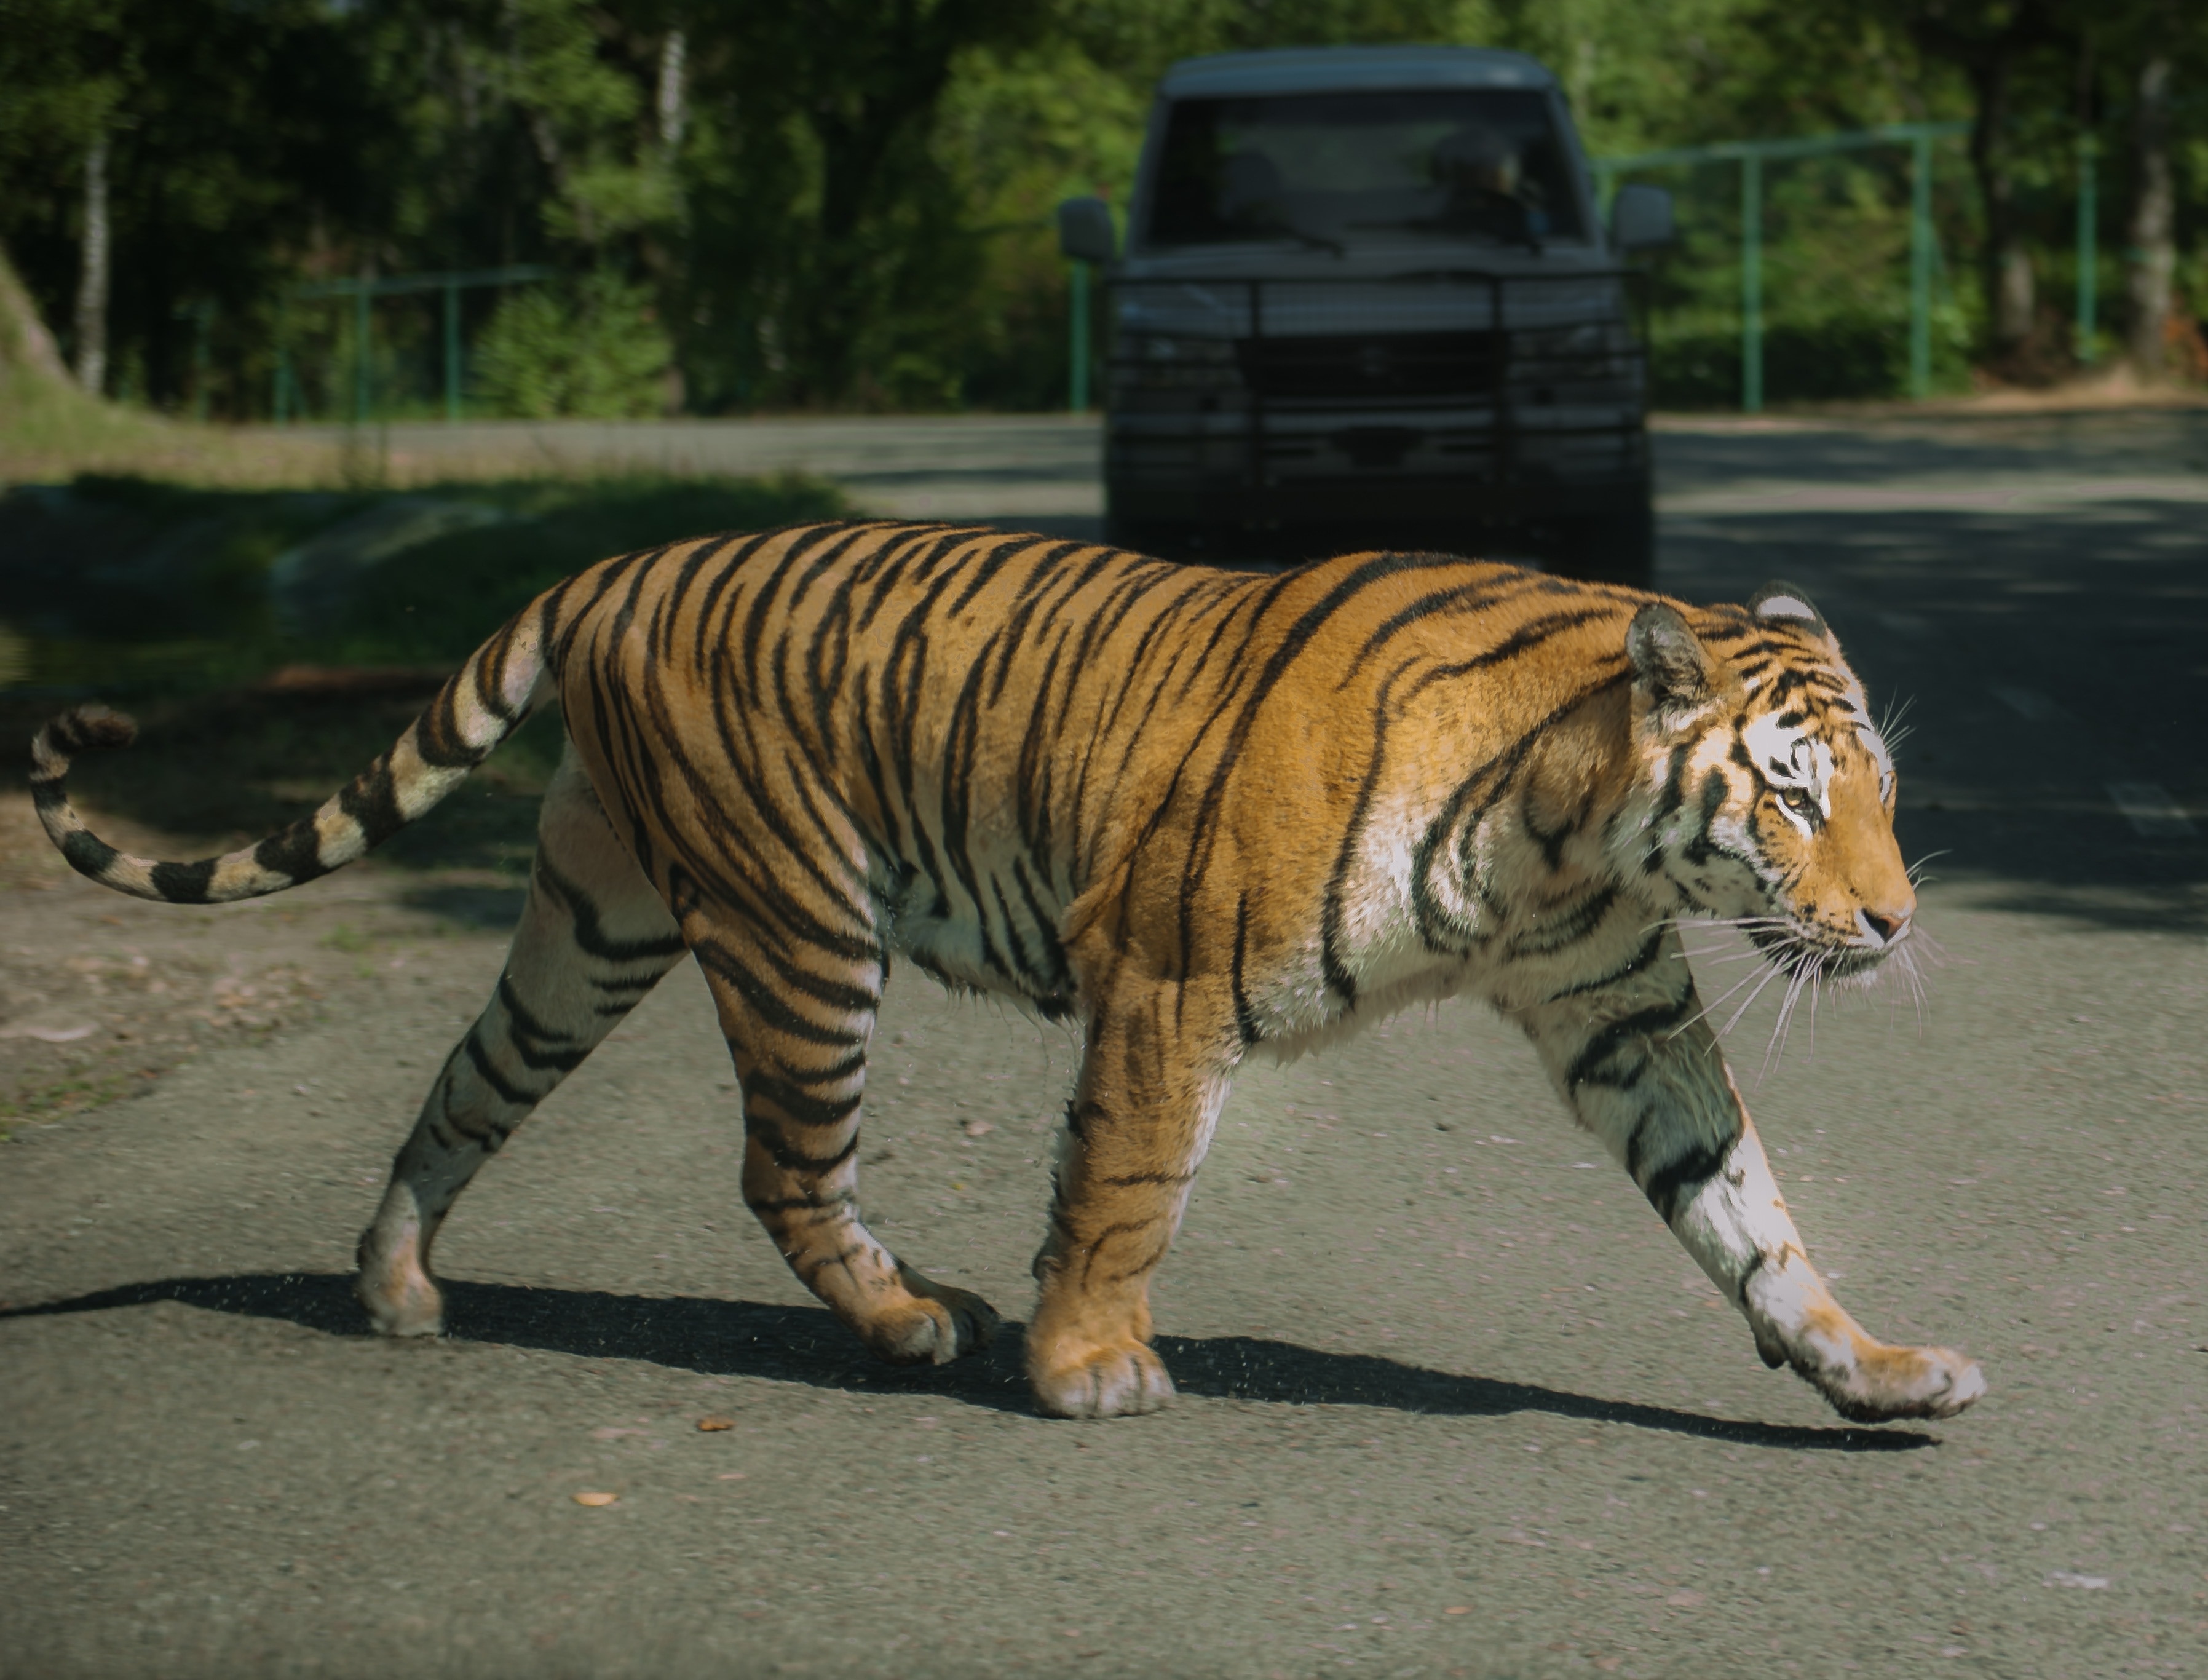 tiger walking on gray concrtee road during daytime